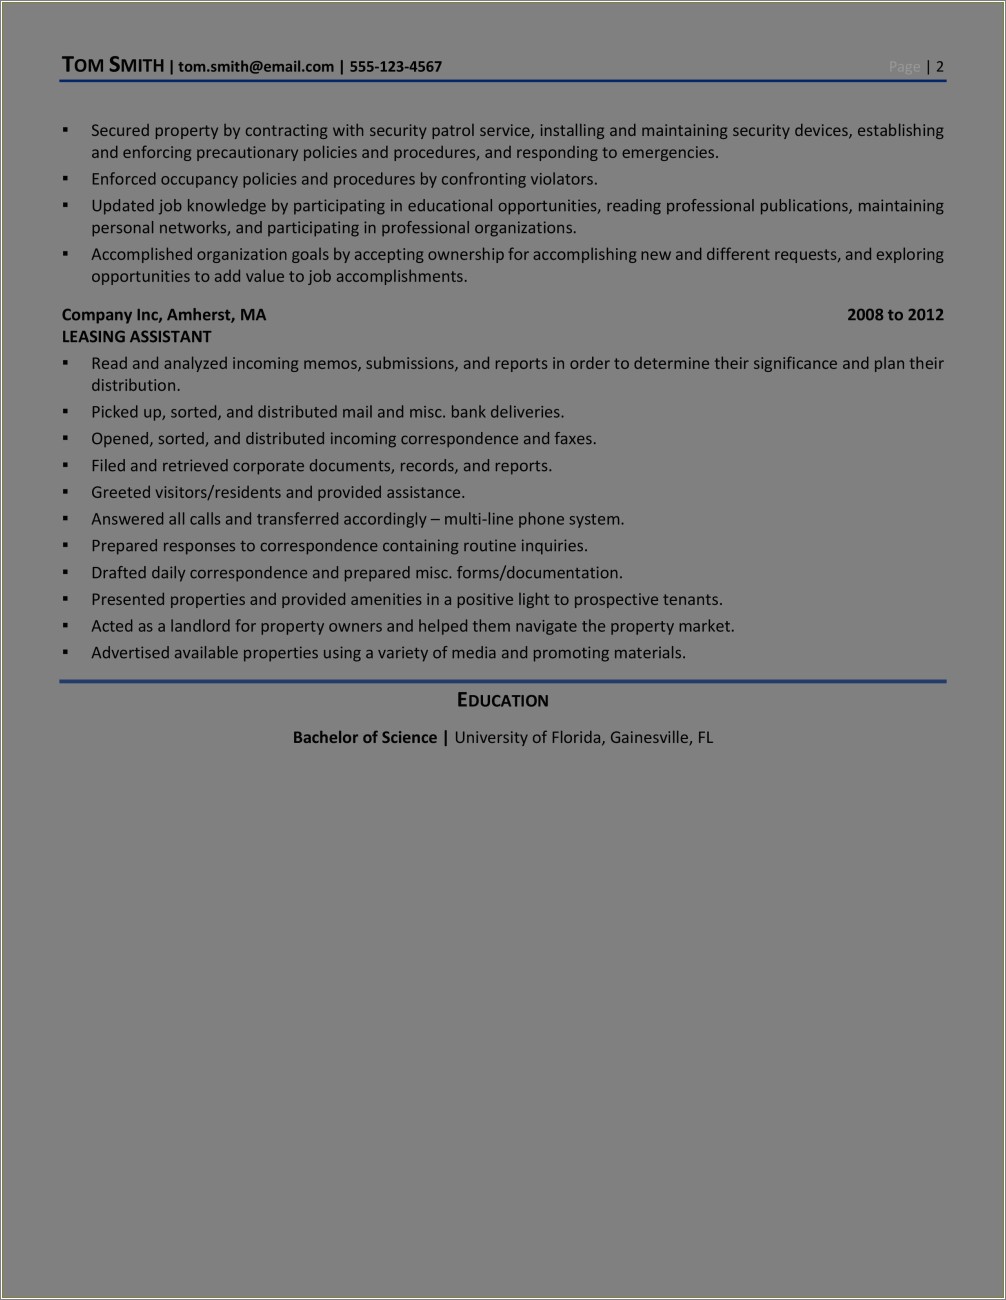 Professional Summary Resume For Senior Health Adjuster